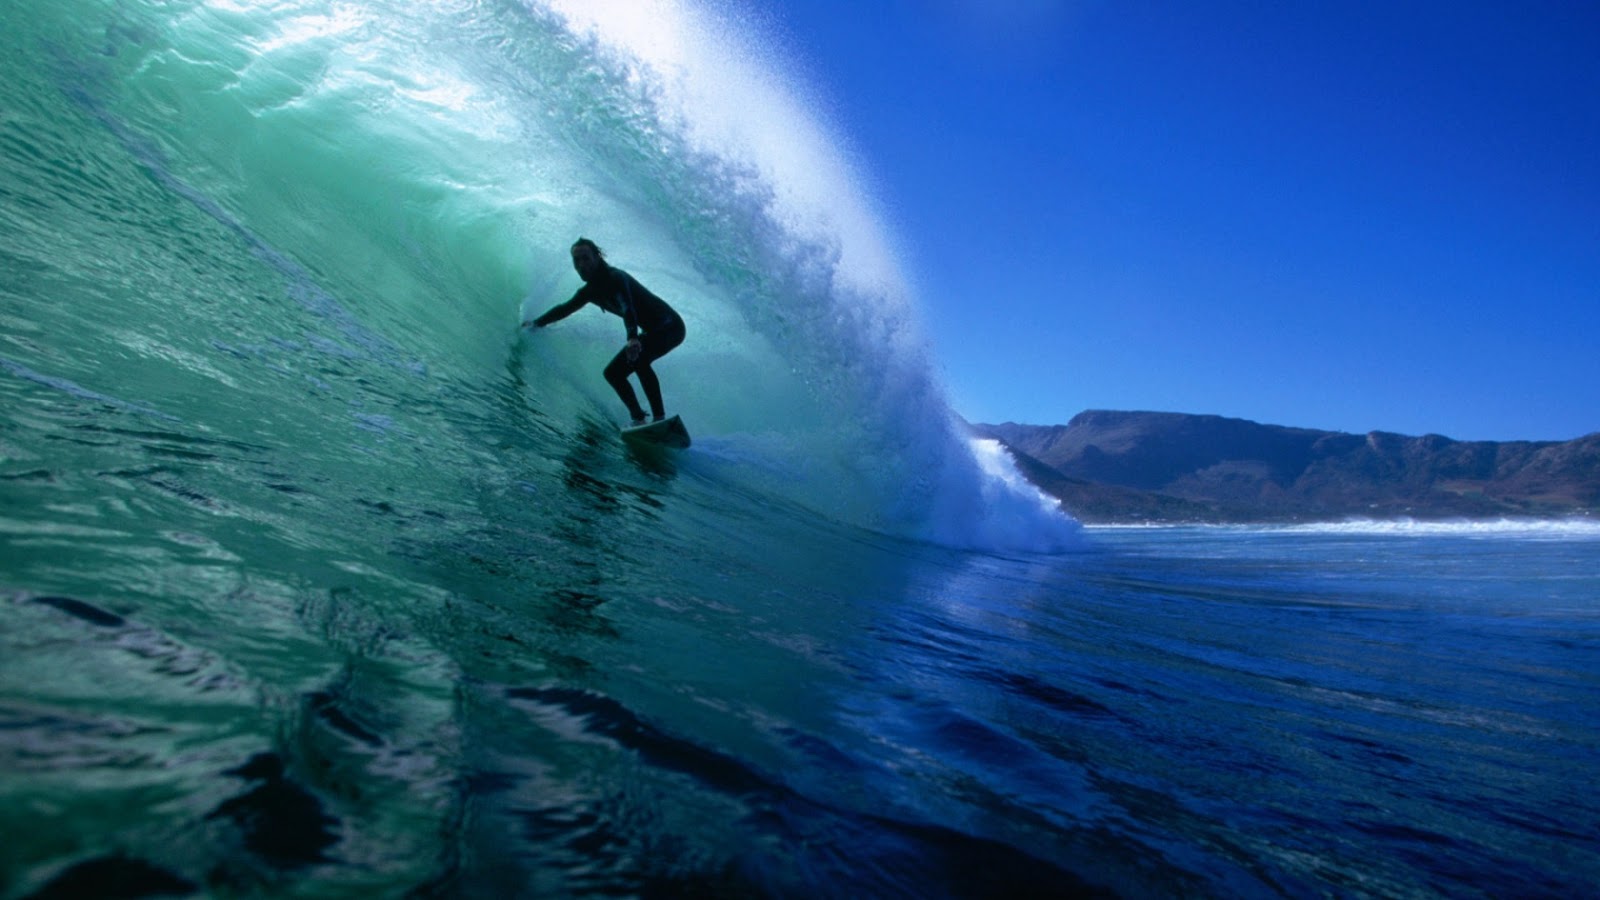 ocean waves wallpaper,surfing equipment,wave,surfing,surfboard,boardsport